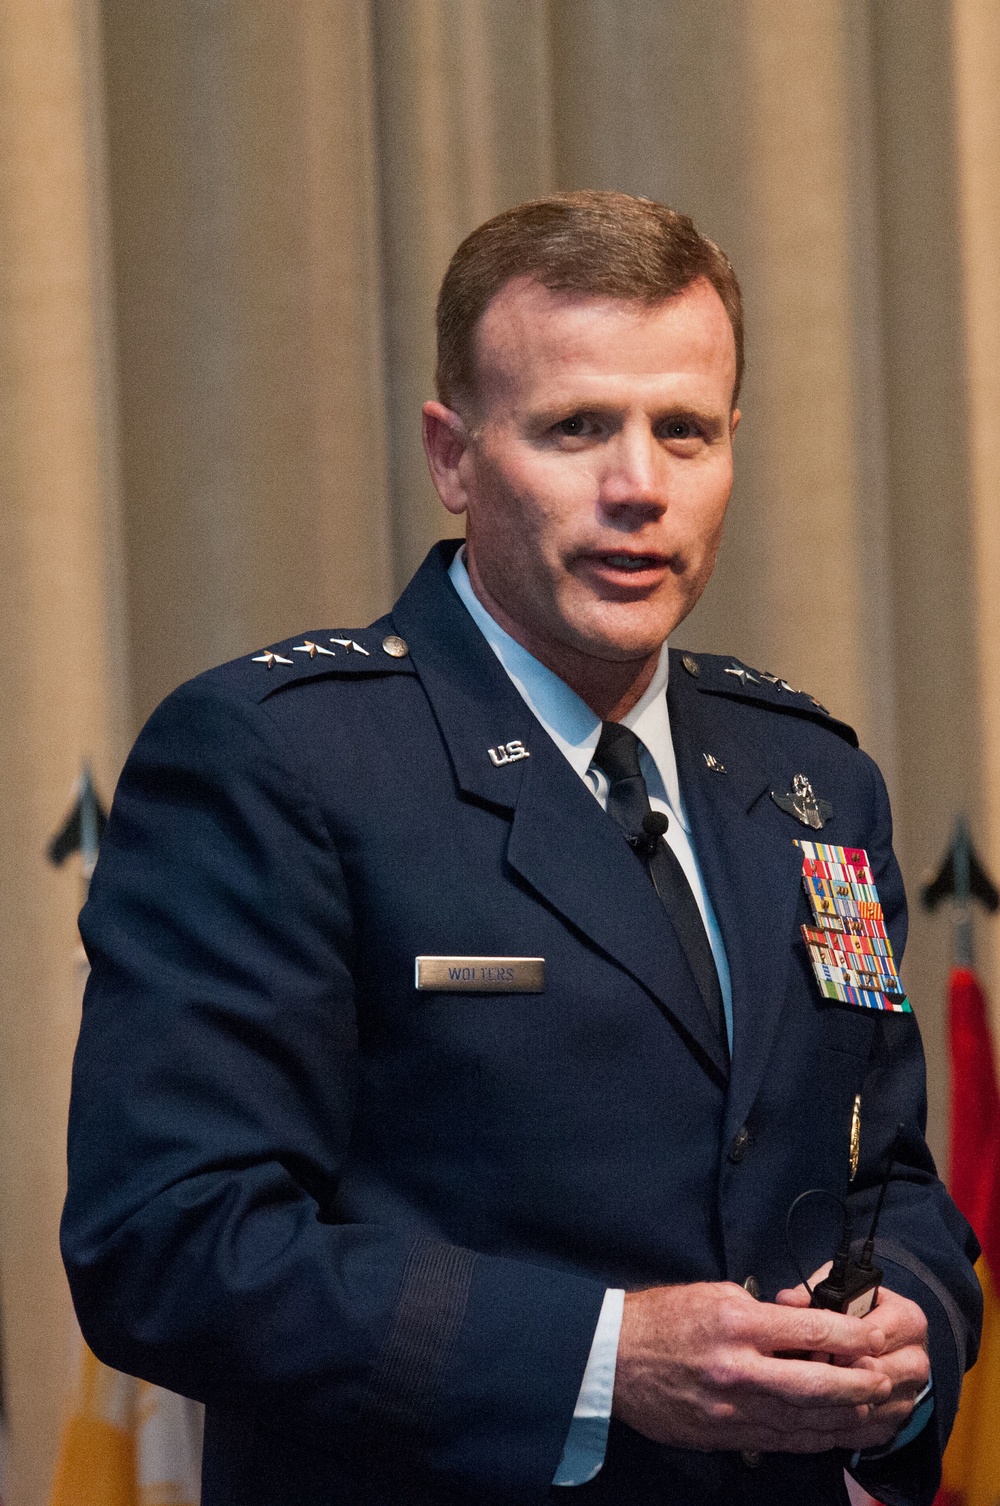 Speaker at Air War College graduation 2015